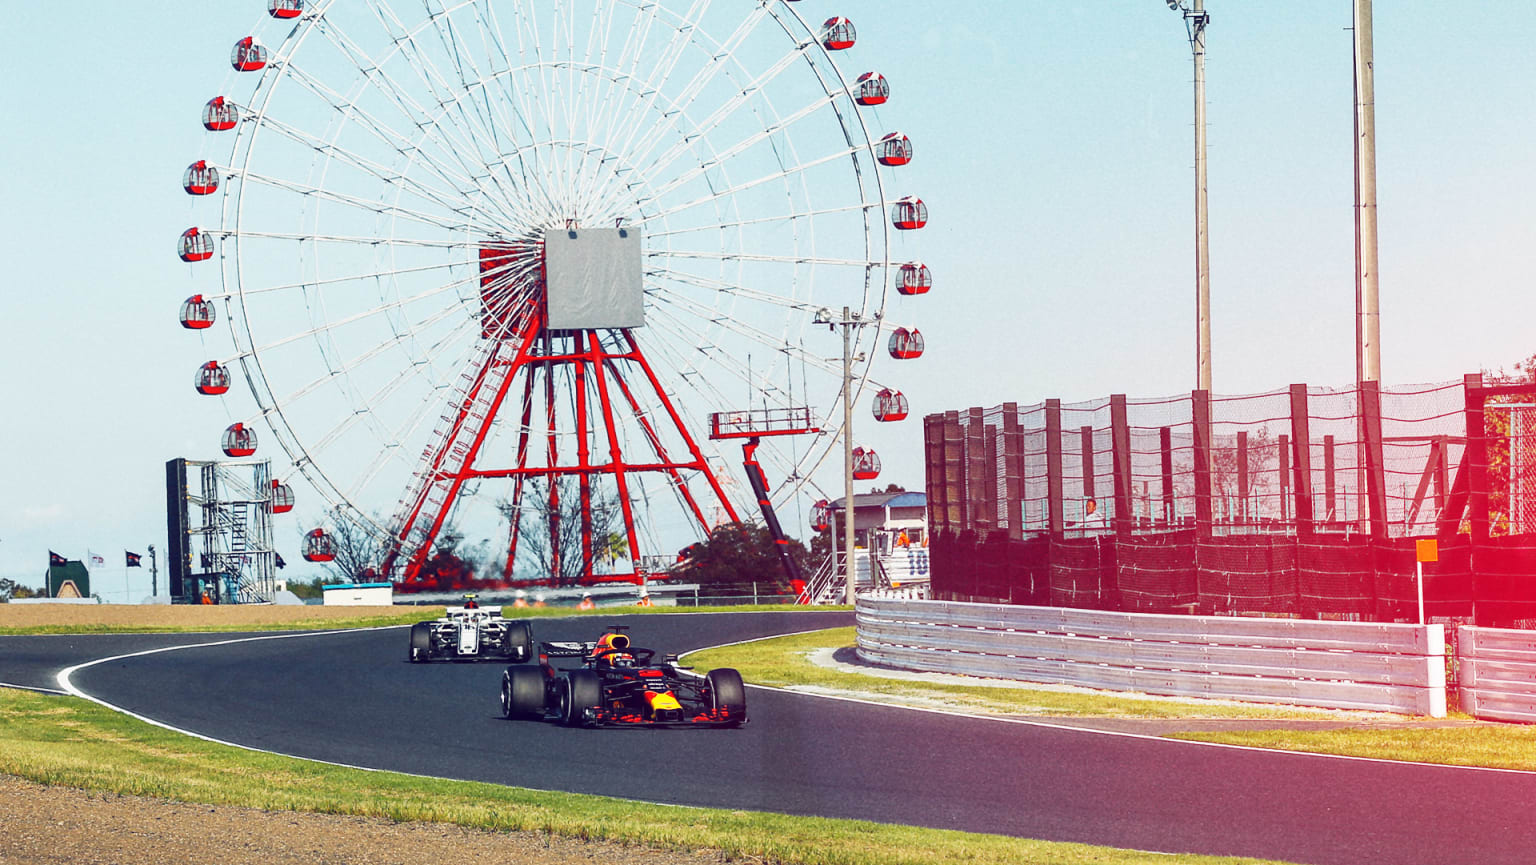 Japanese Grand Prix 2019 - F1 Race